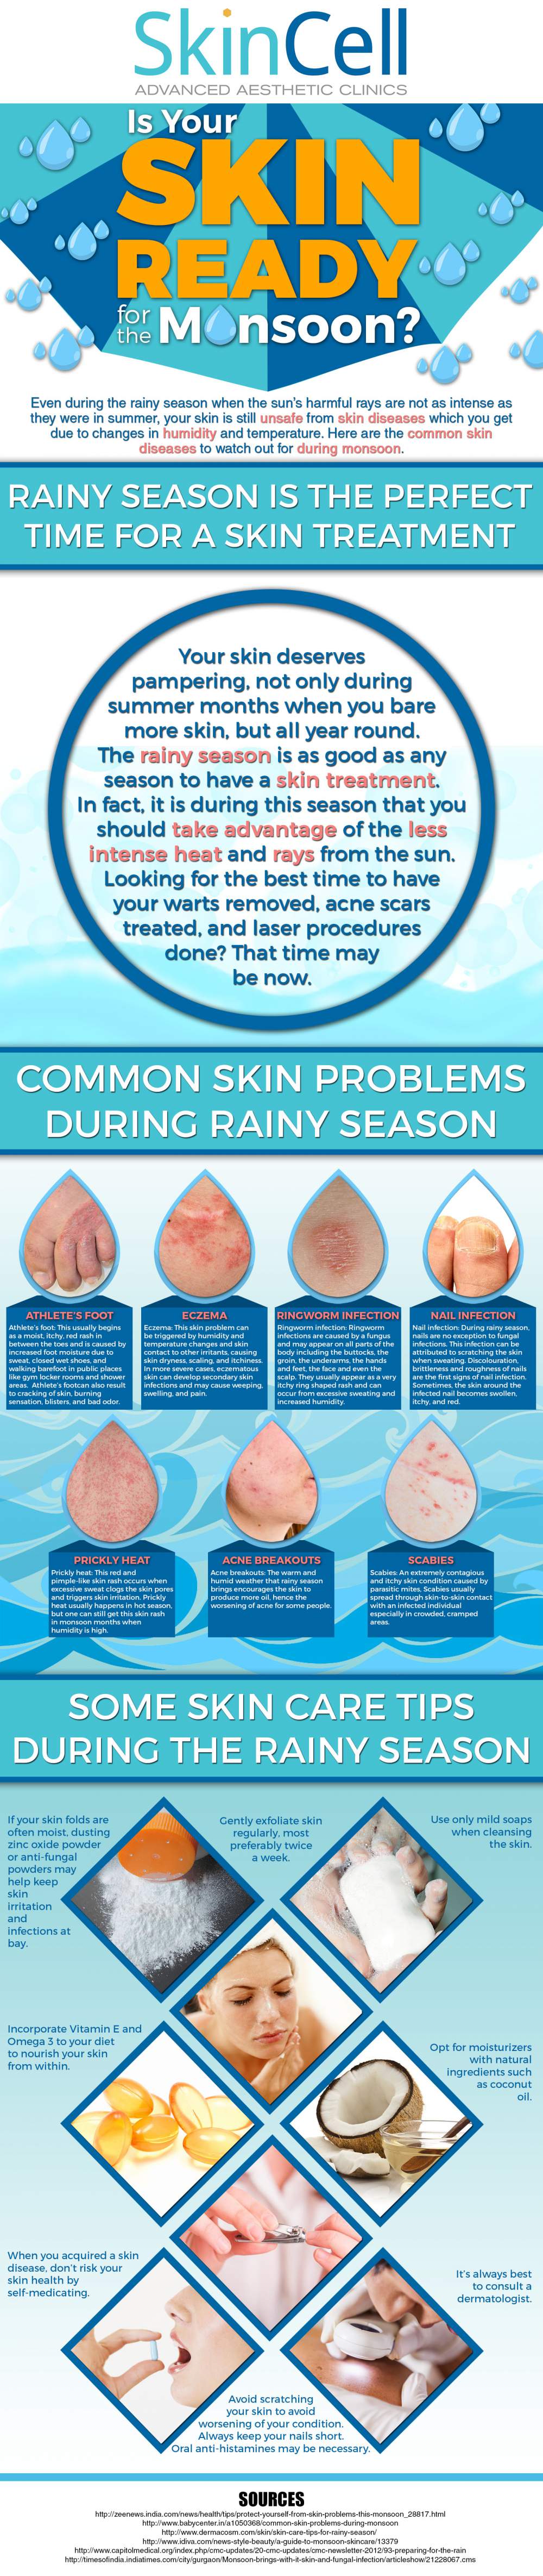 skin-problems-during-rainy-season